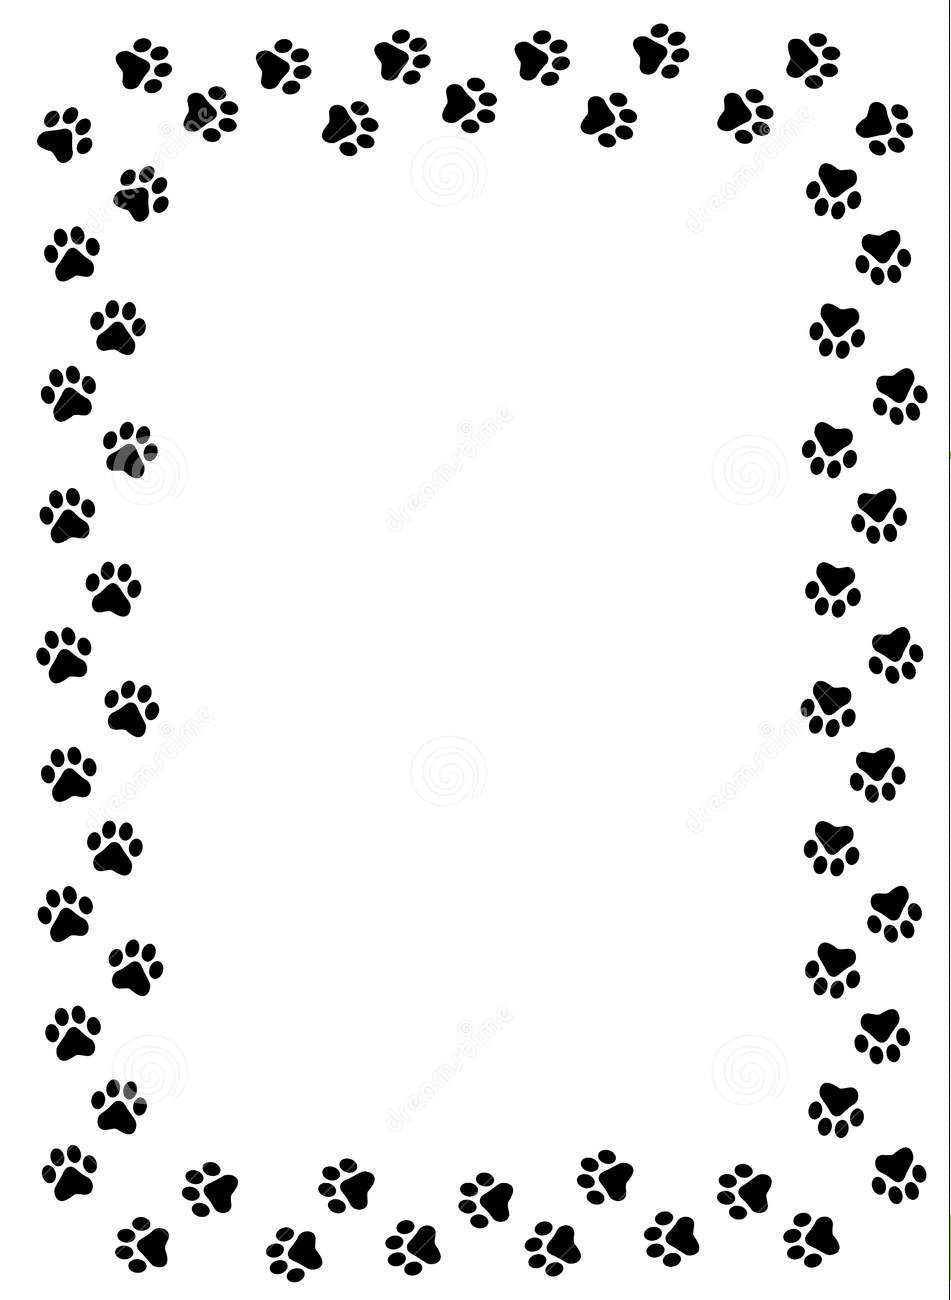 [48+] Dog Wallpaper Border | WallpaperSafari.com